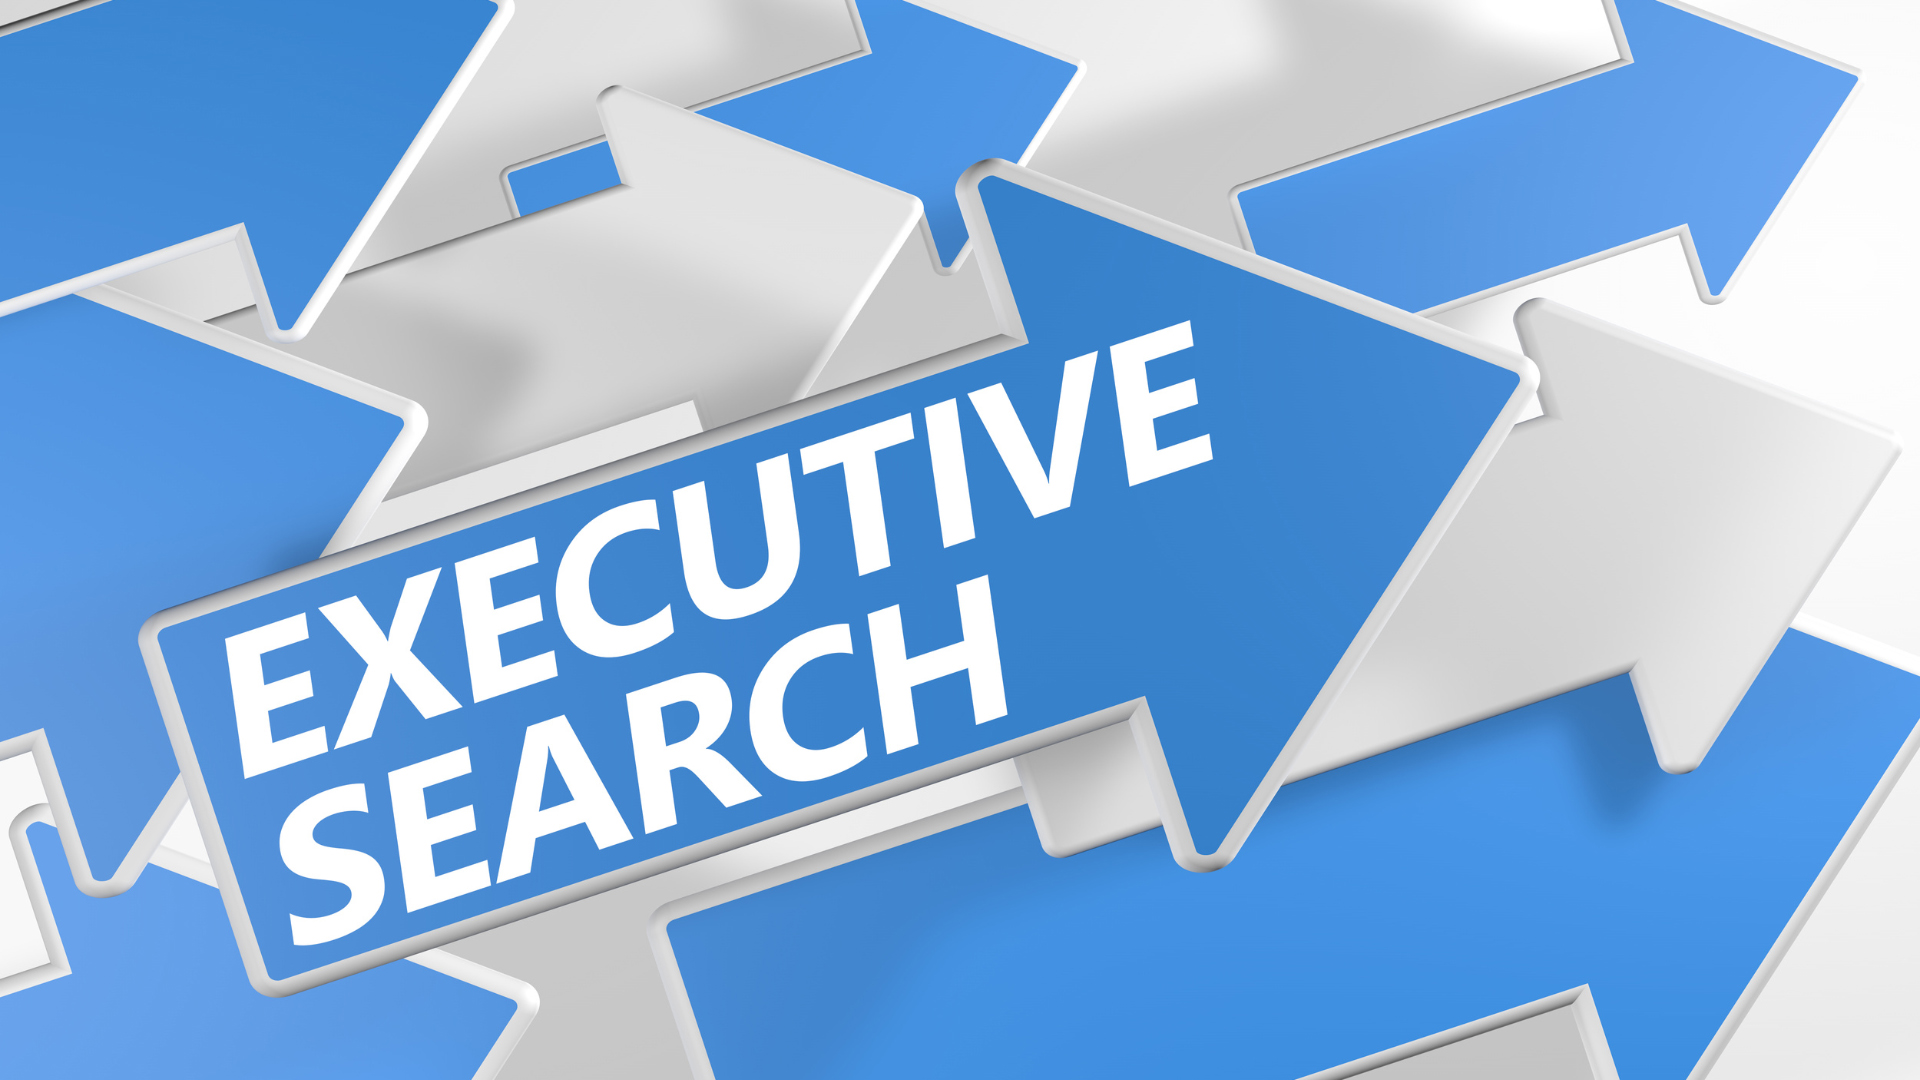 executive search or recruitment firms